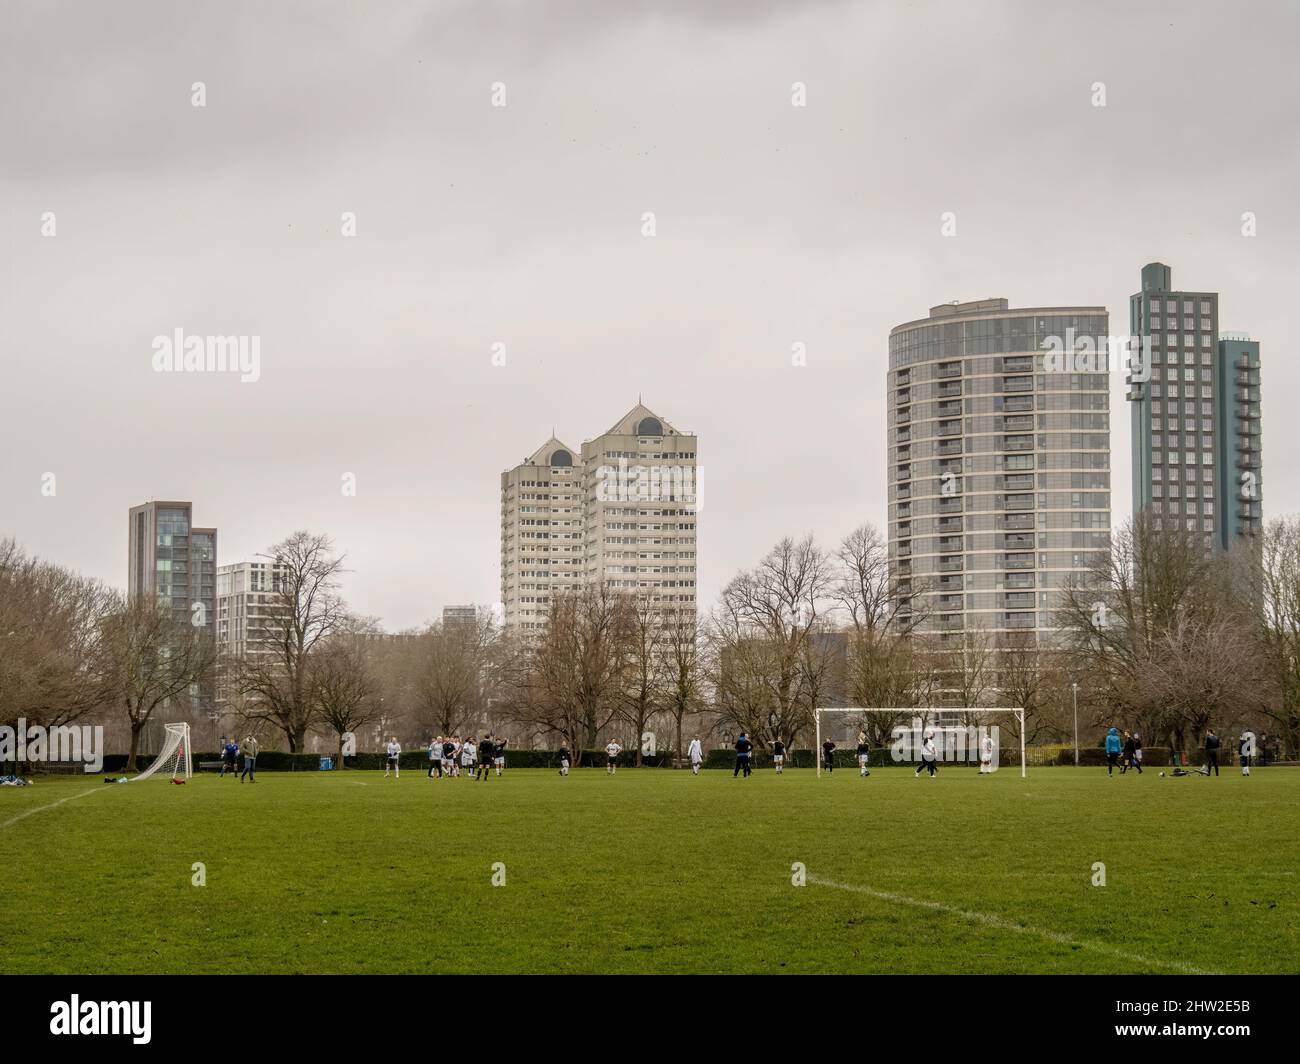 LONDON, ENGLAND - FEBRUARY 20 2022: Amateur sports on a Sunday in an urban city environment. Football, soccer. Stock Photo